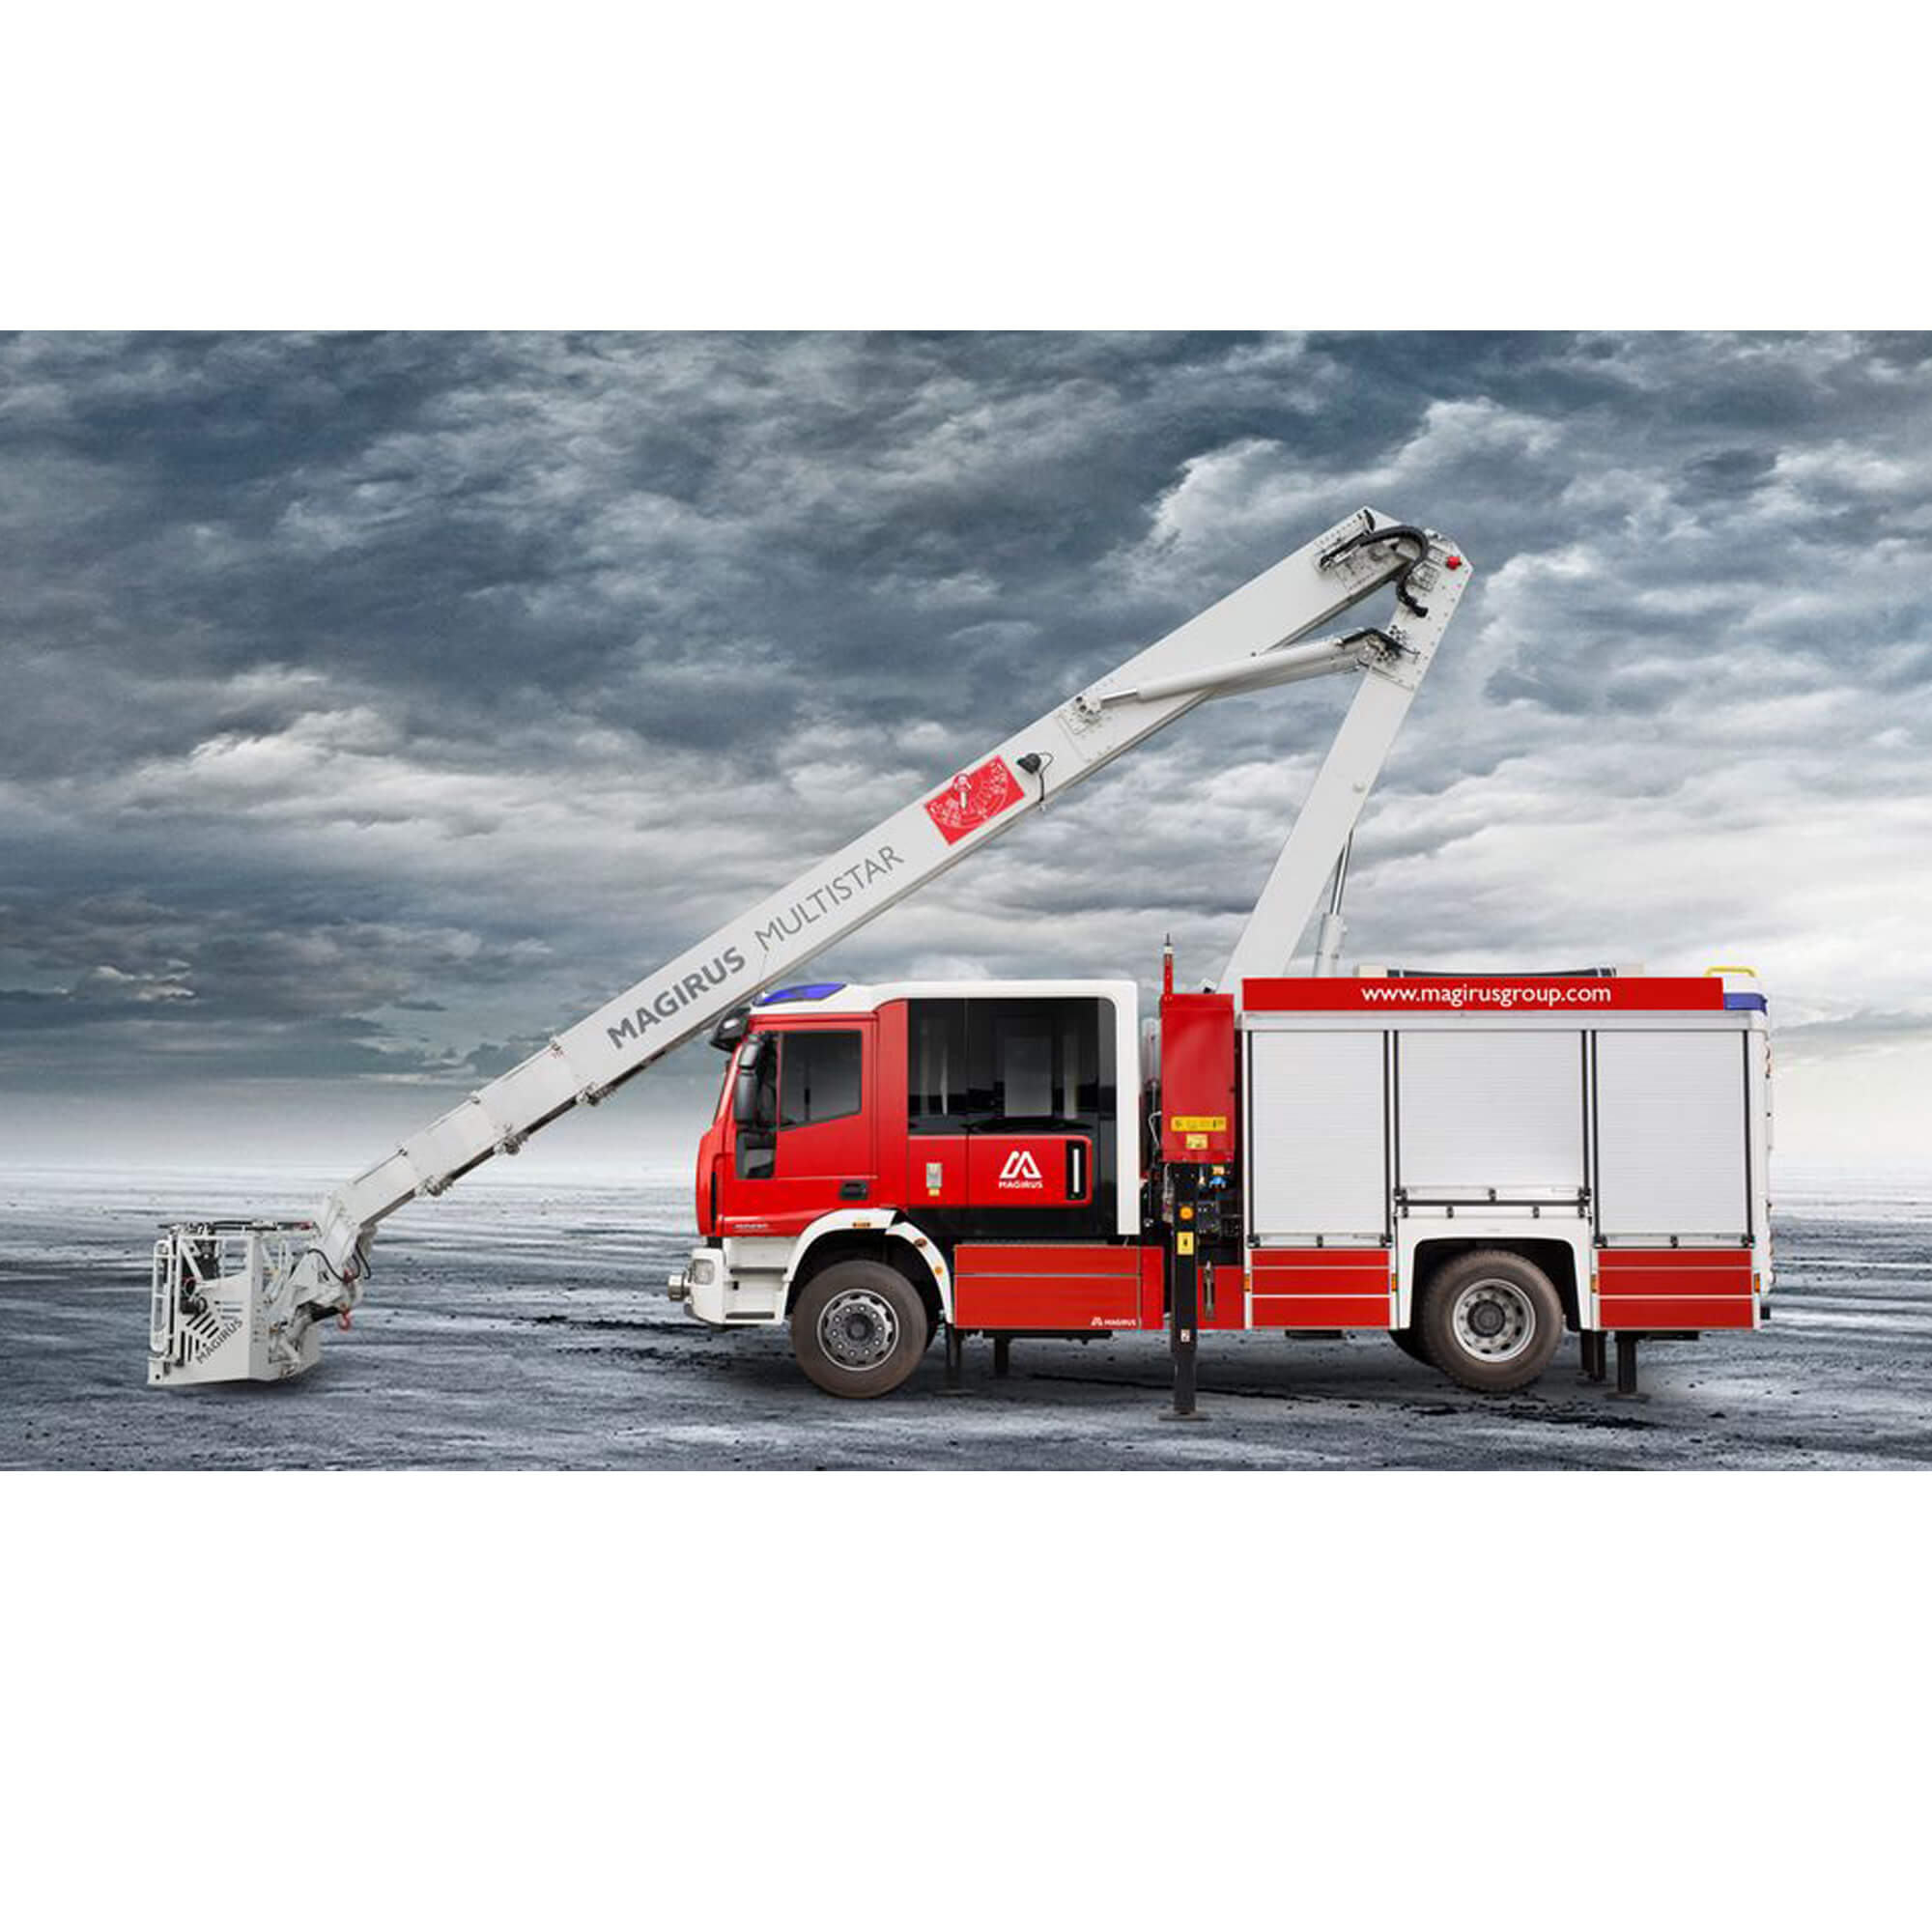 Firefighting Special Vehicle Magirus MultiStar